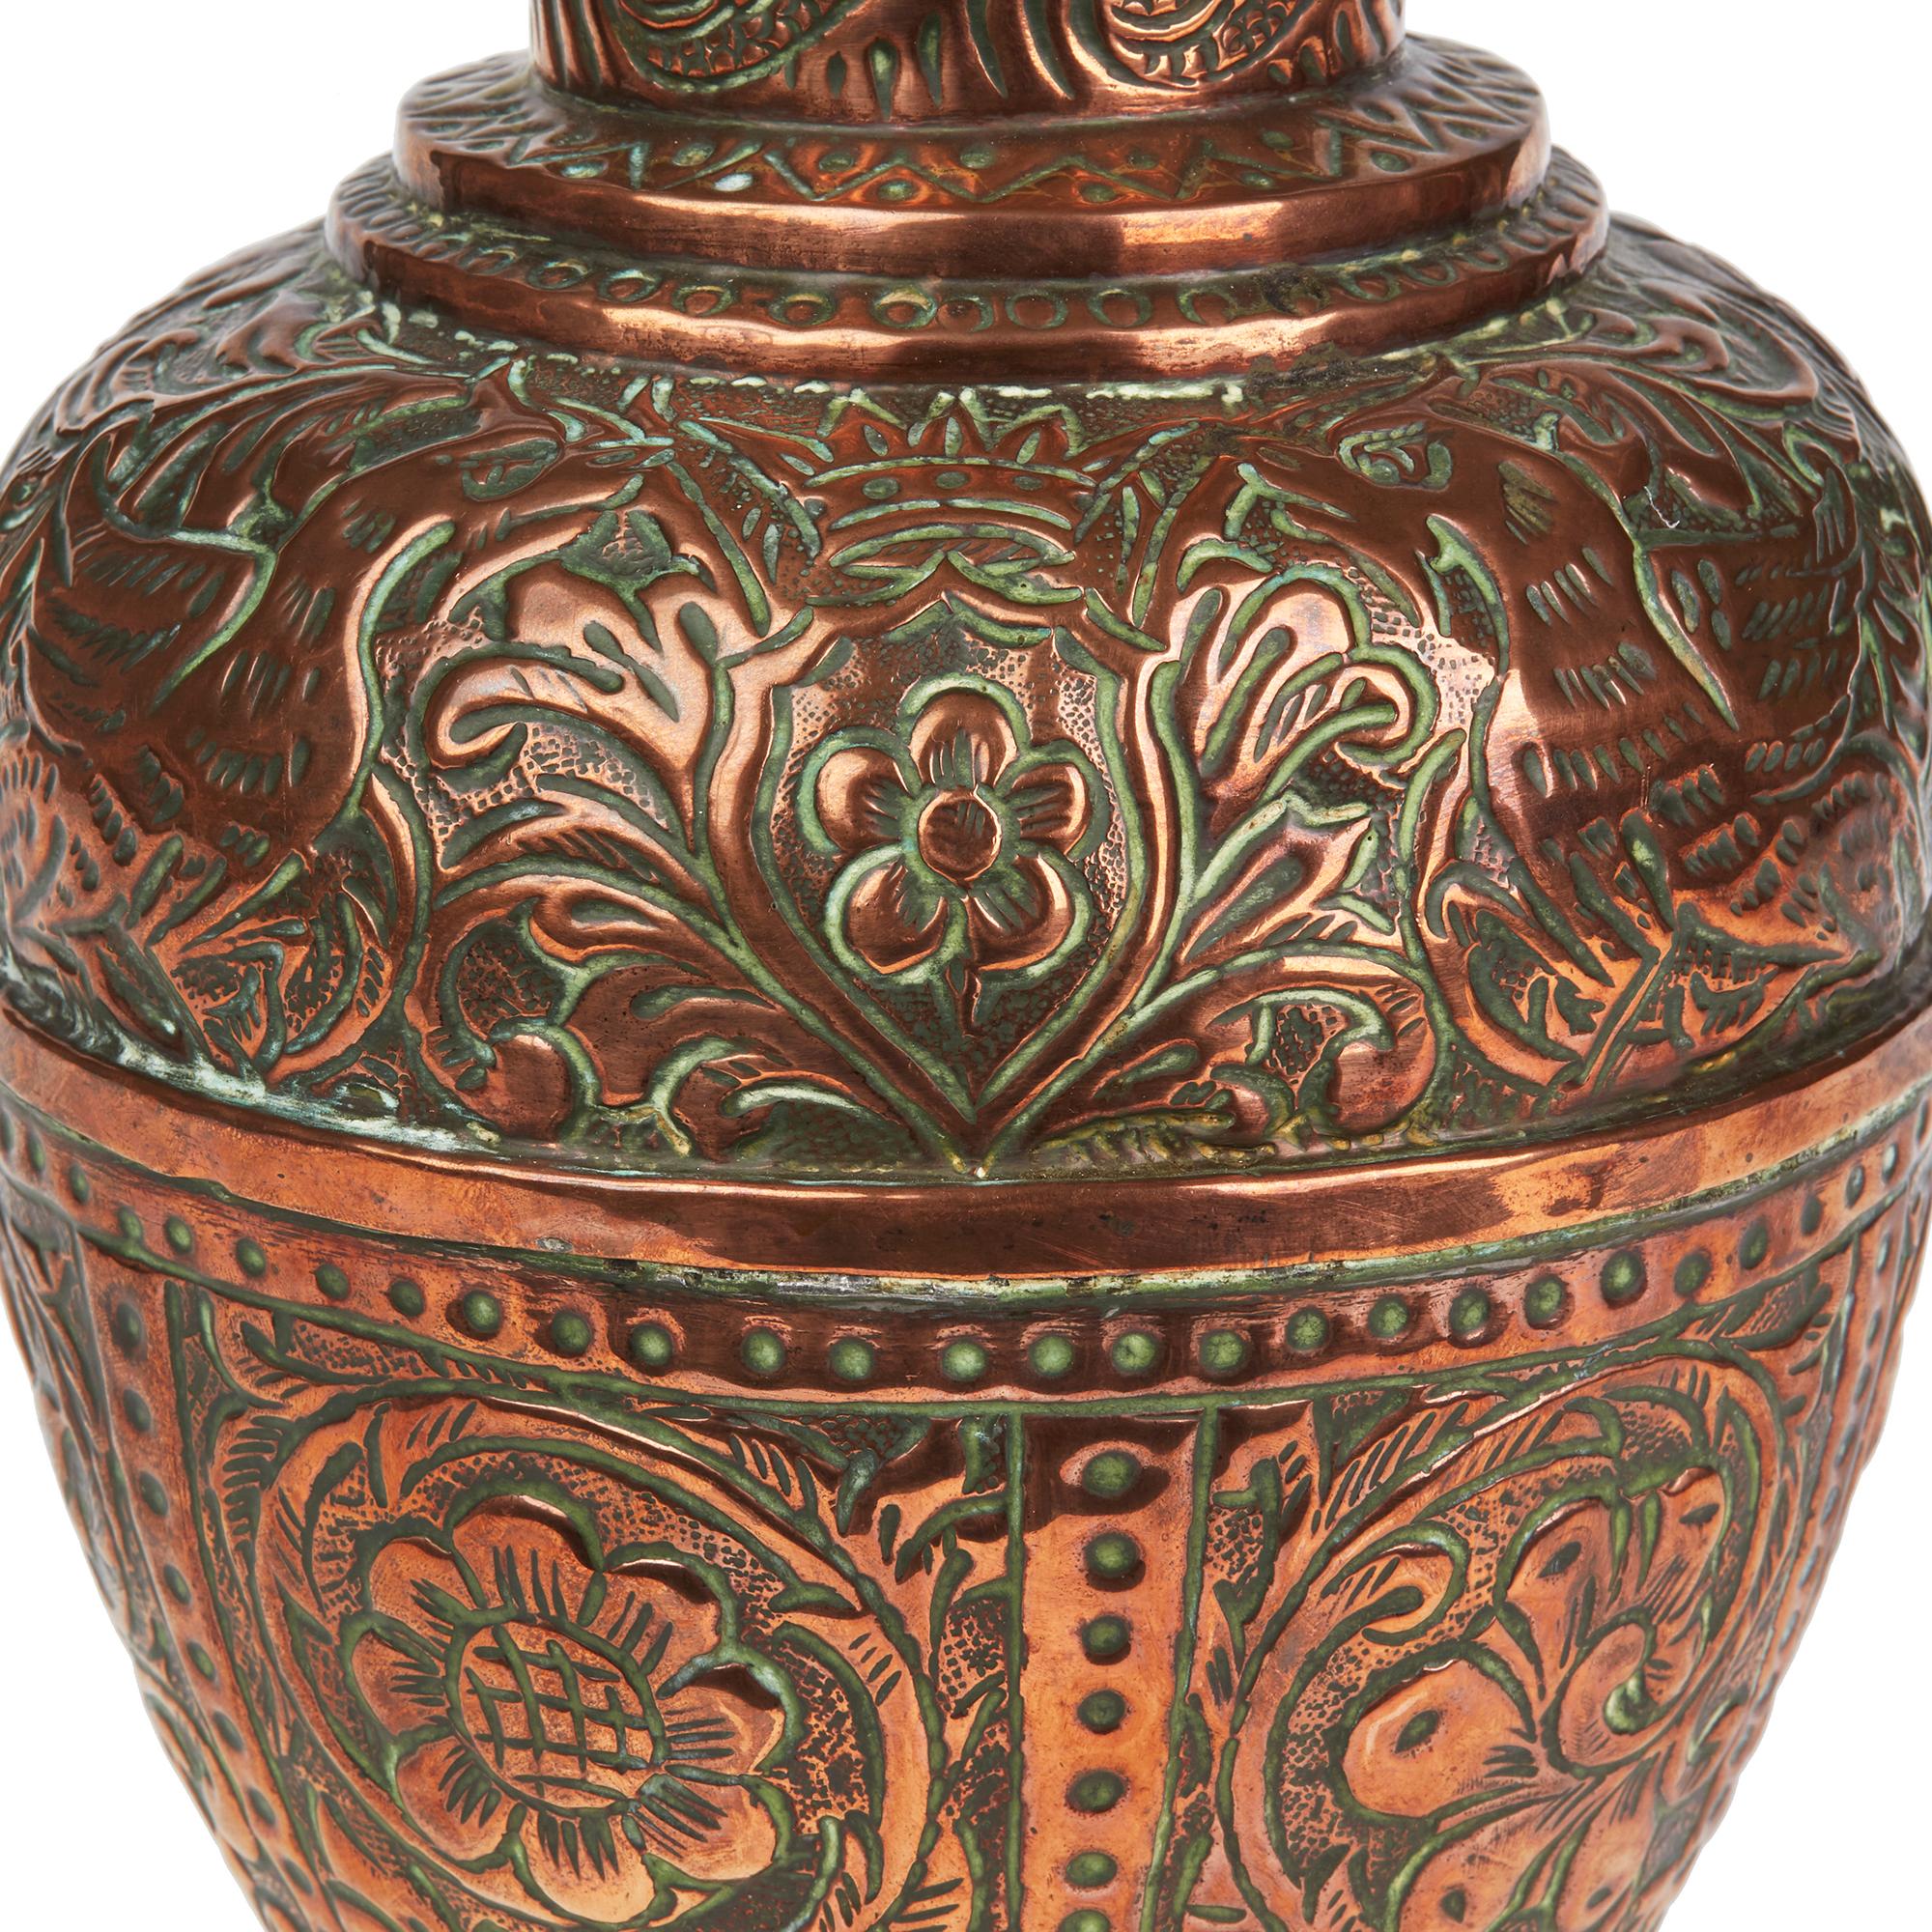 Rustic Stylish Antique Asian Twin Handled Repousse Design Copper Vase 19th Century